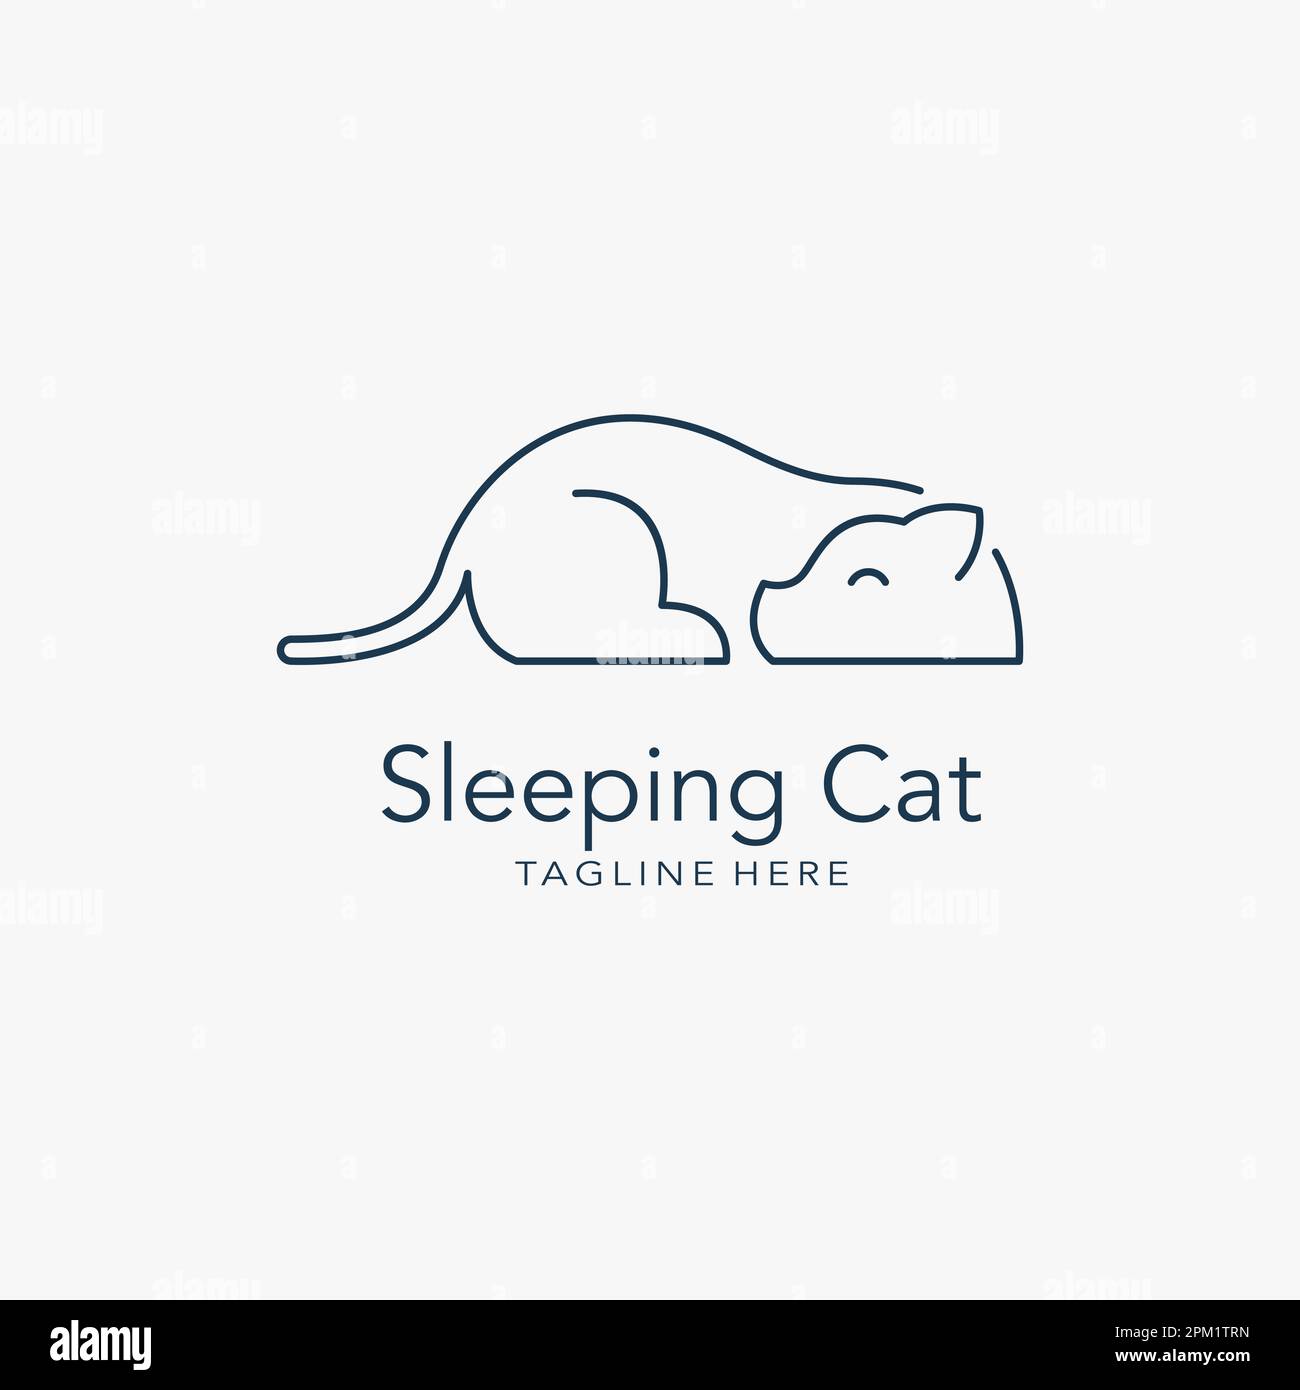 Sleeping Cat logo design in linea stile arte Illustrazione Vettoriale